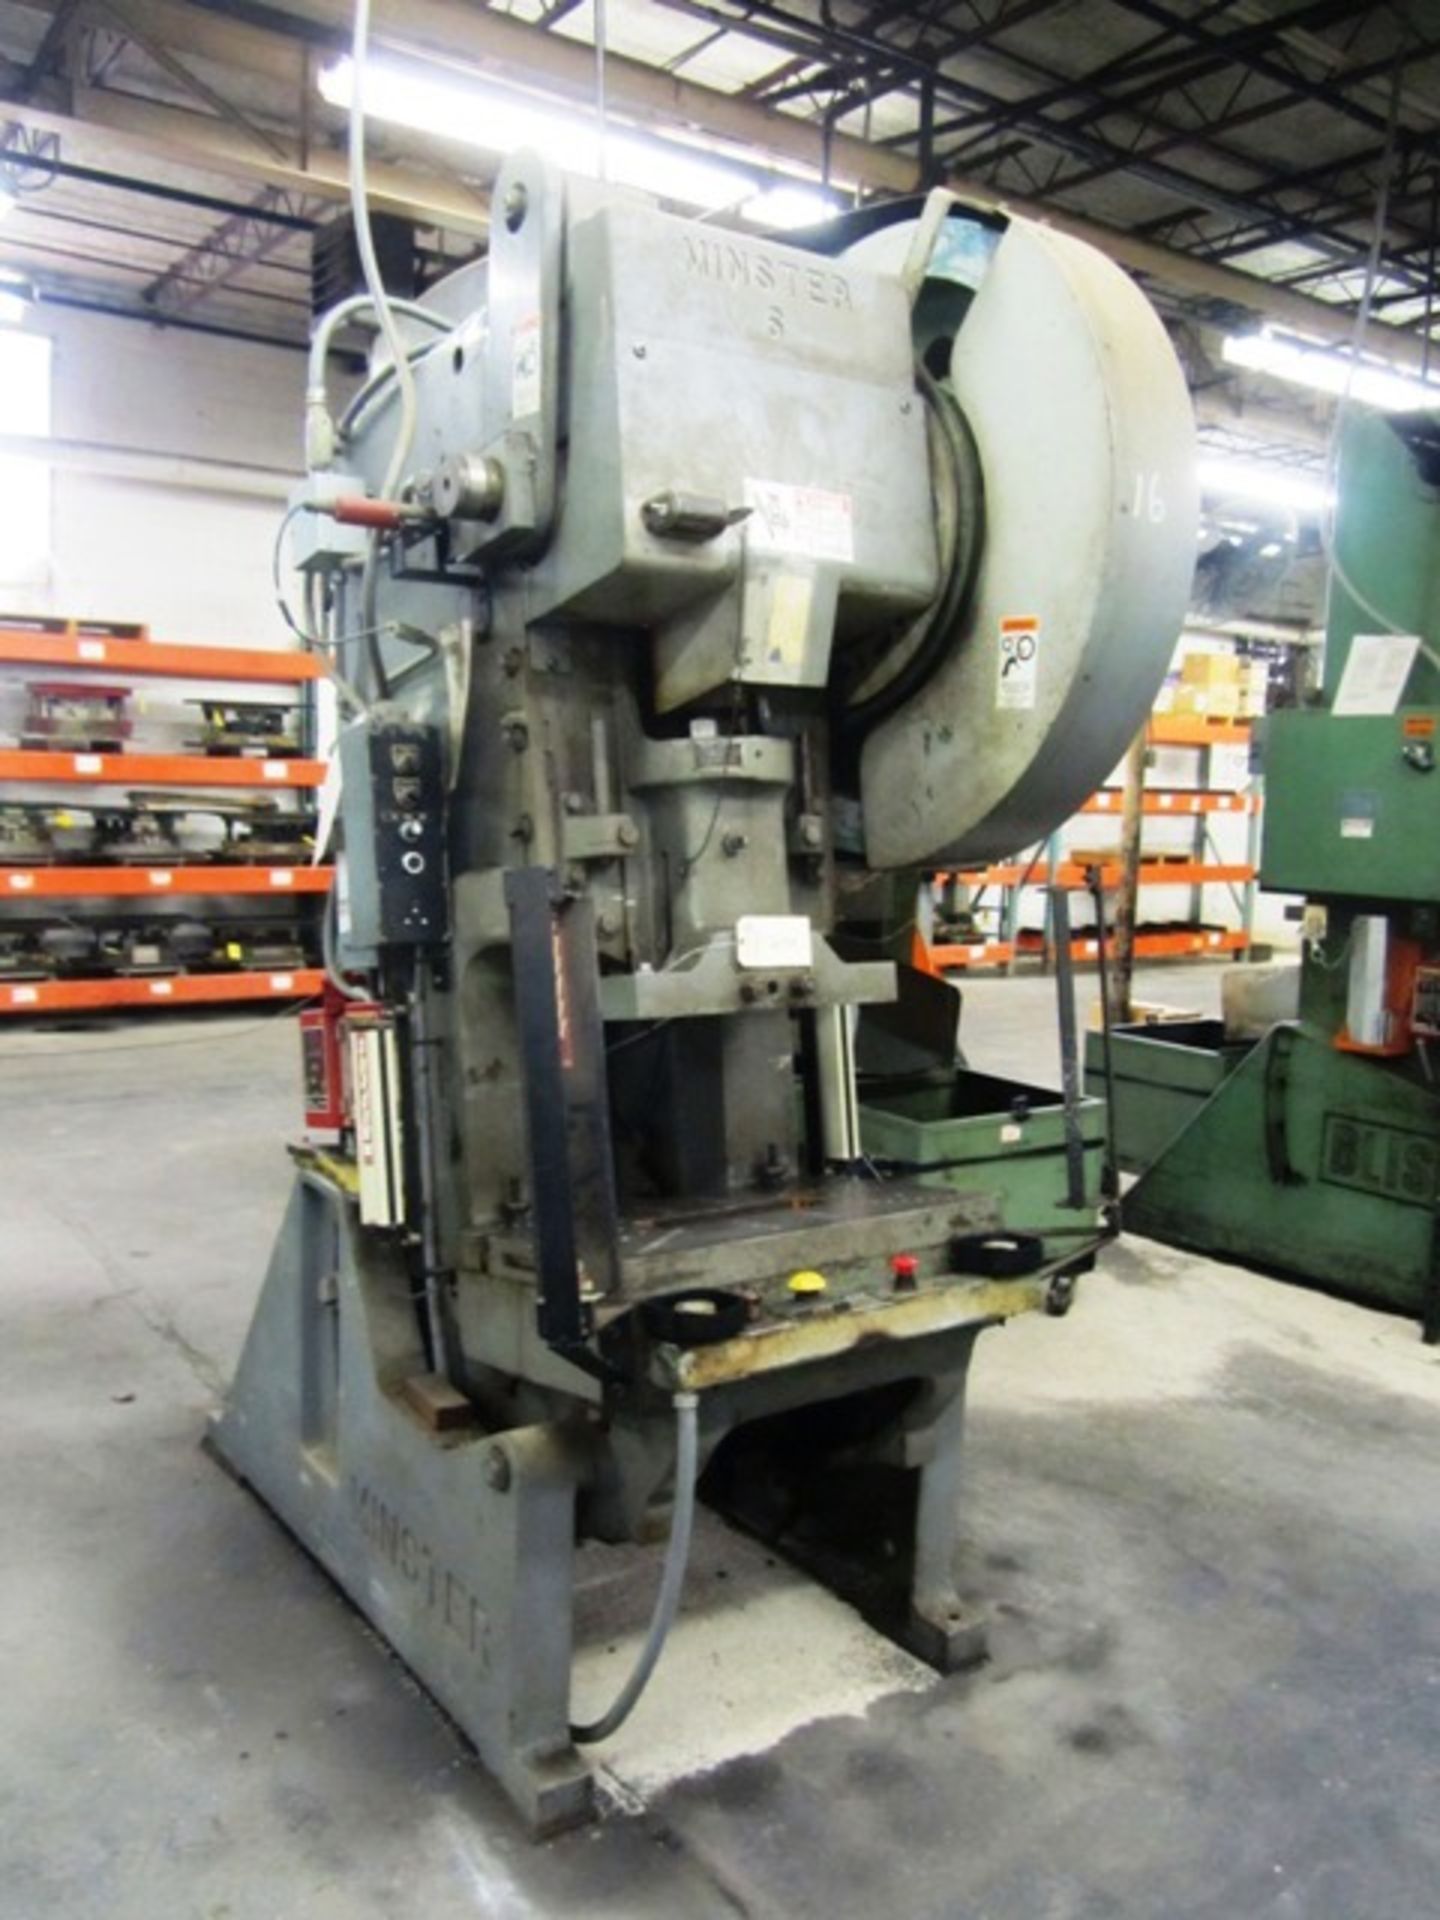 Minster 6 60-Ton OBI Punch Press